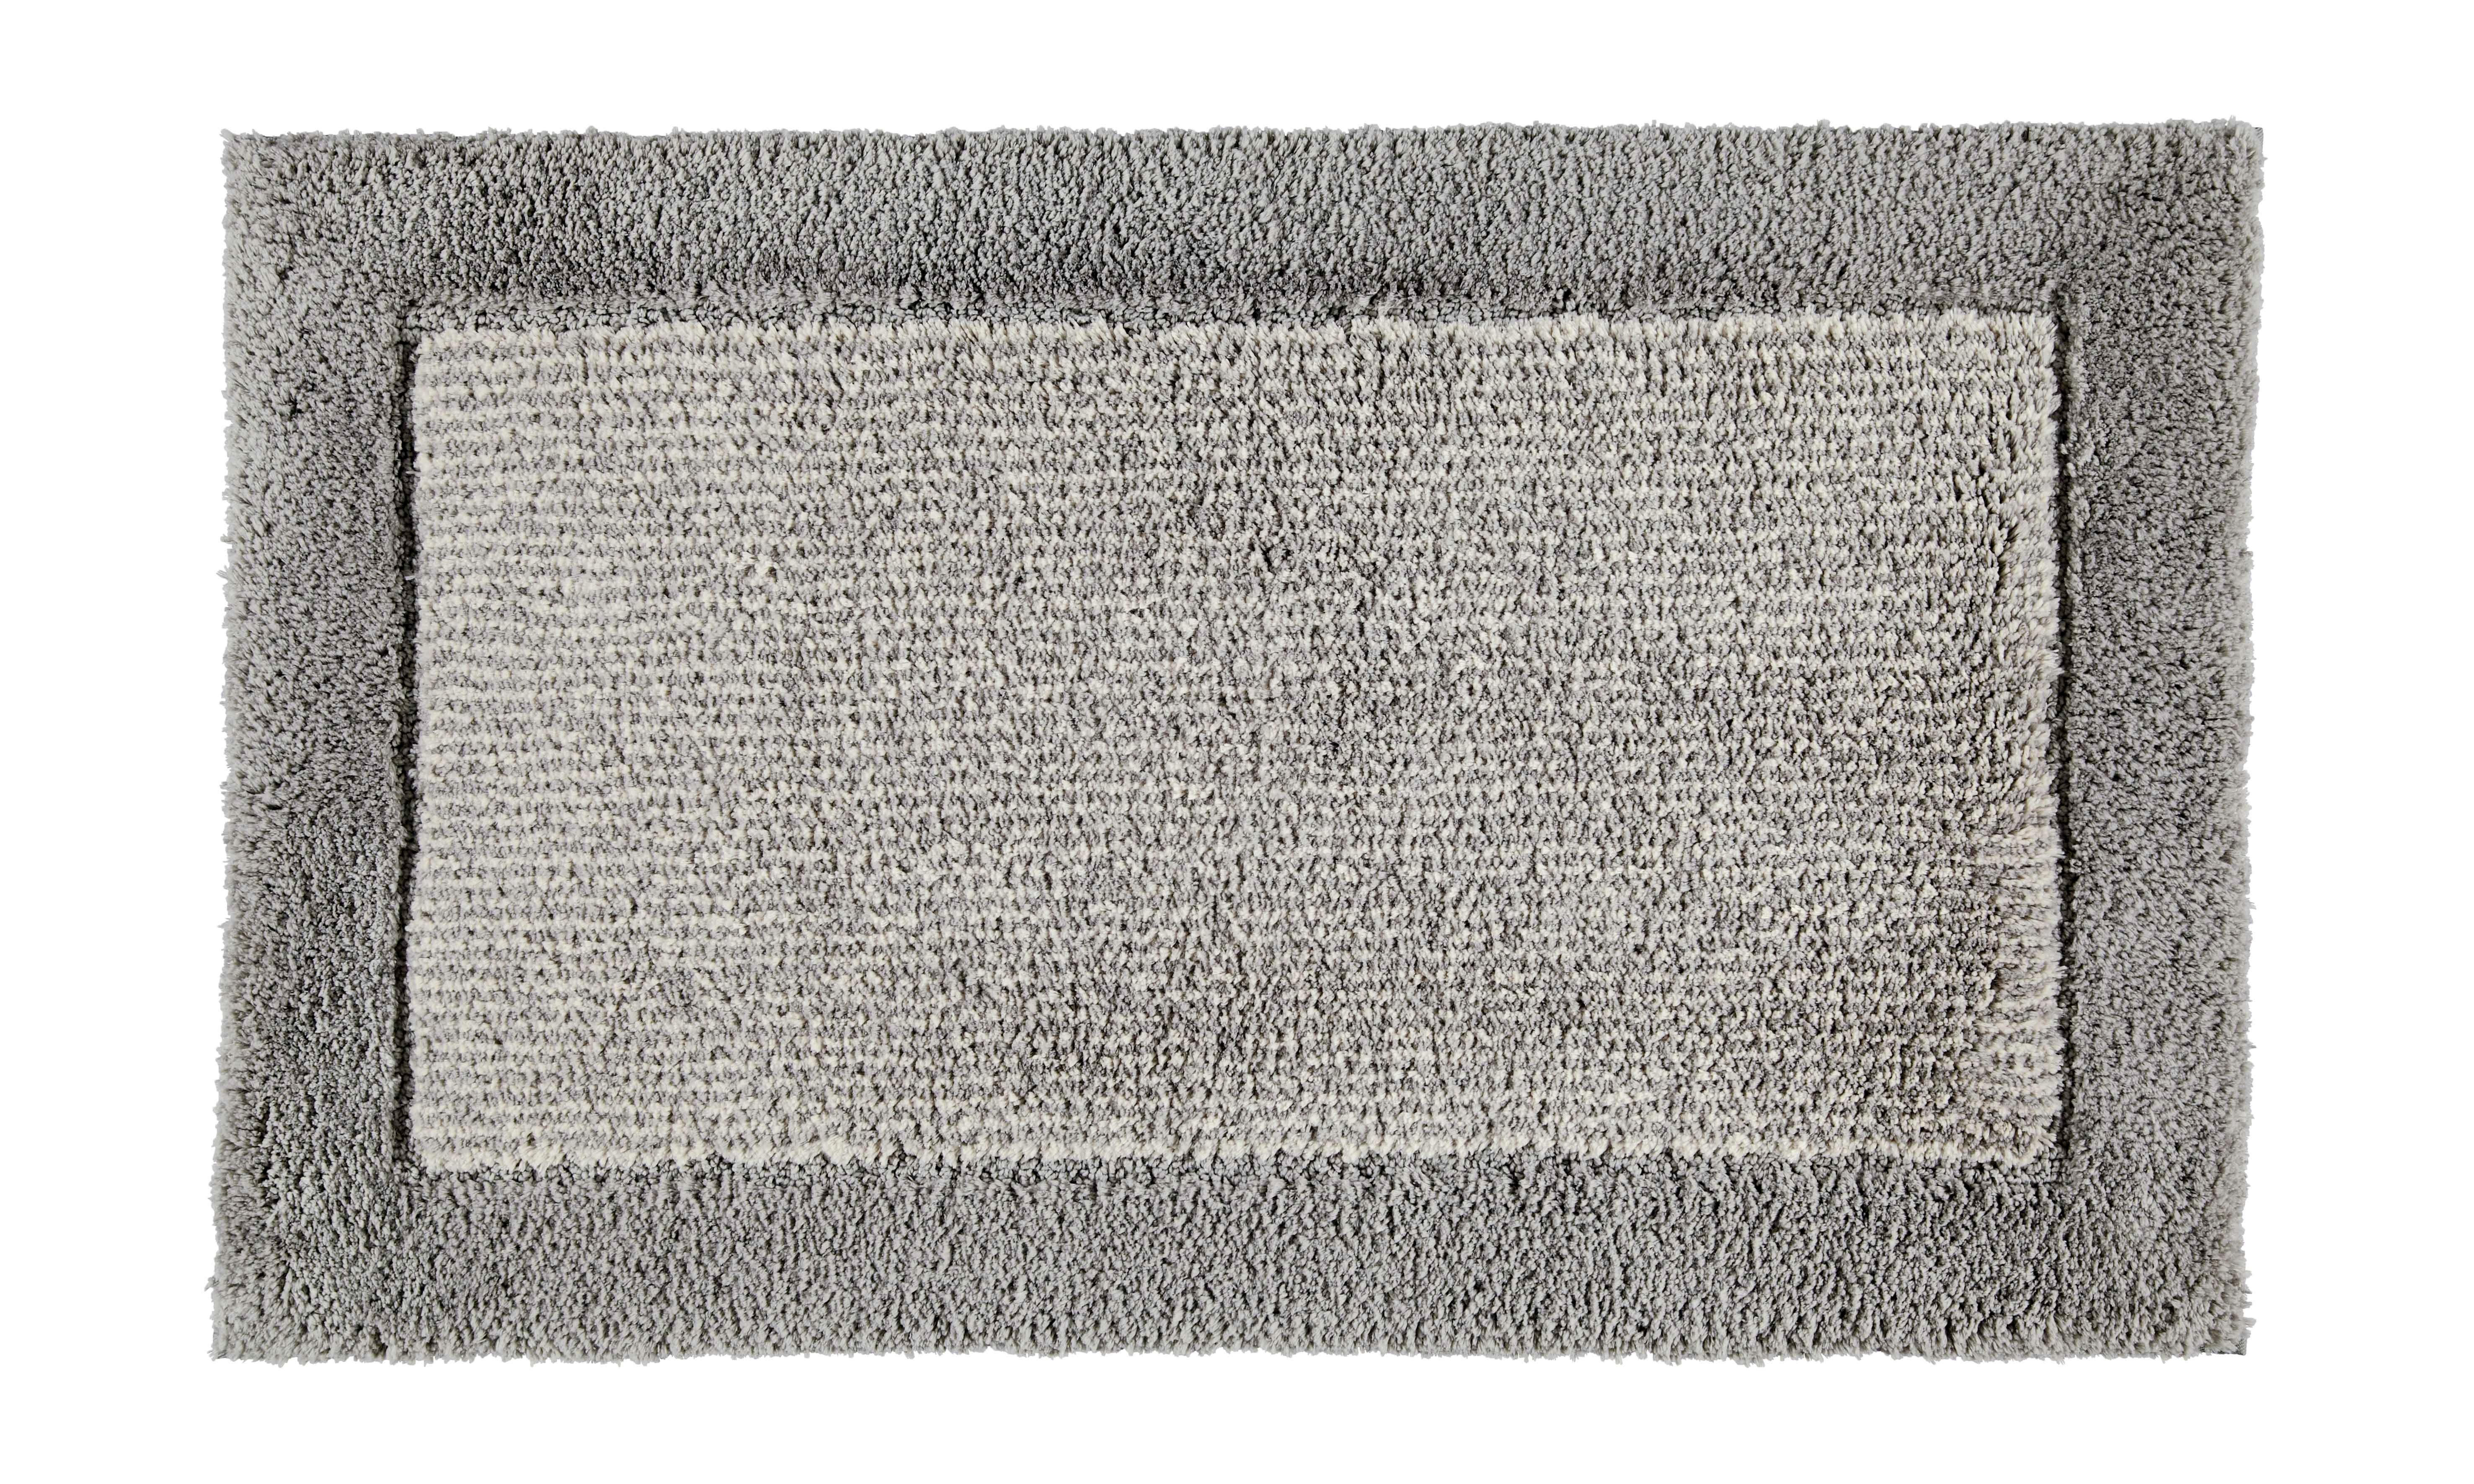 BADTEPPICH  70/120 cm  Graphitfarben, Grau   - Graphitfarben/Grau, Design, Textil (70/120cm) - Cawoe